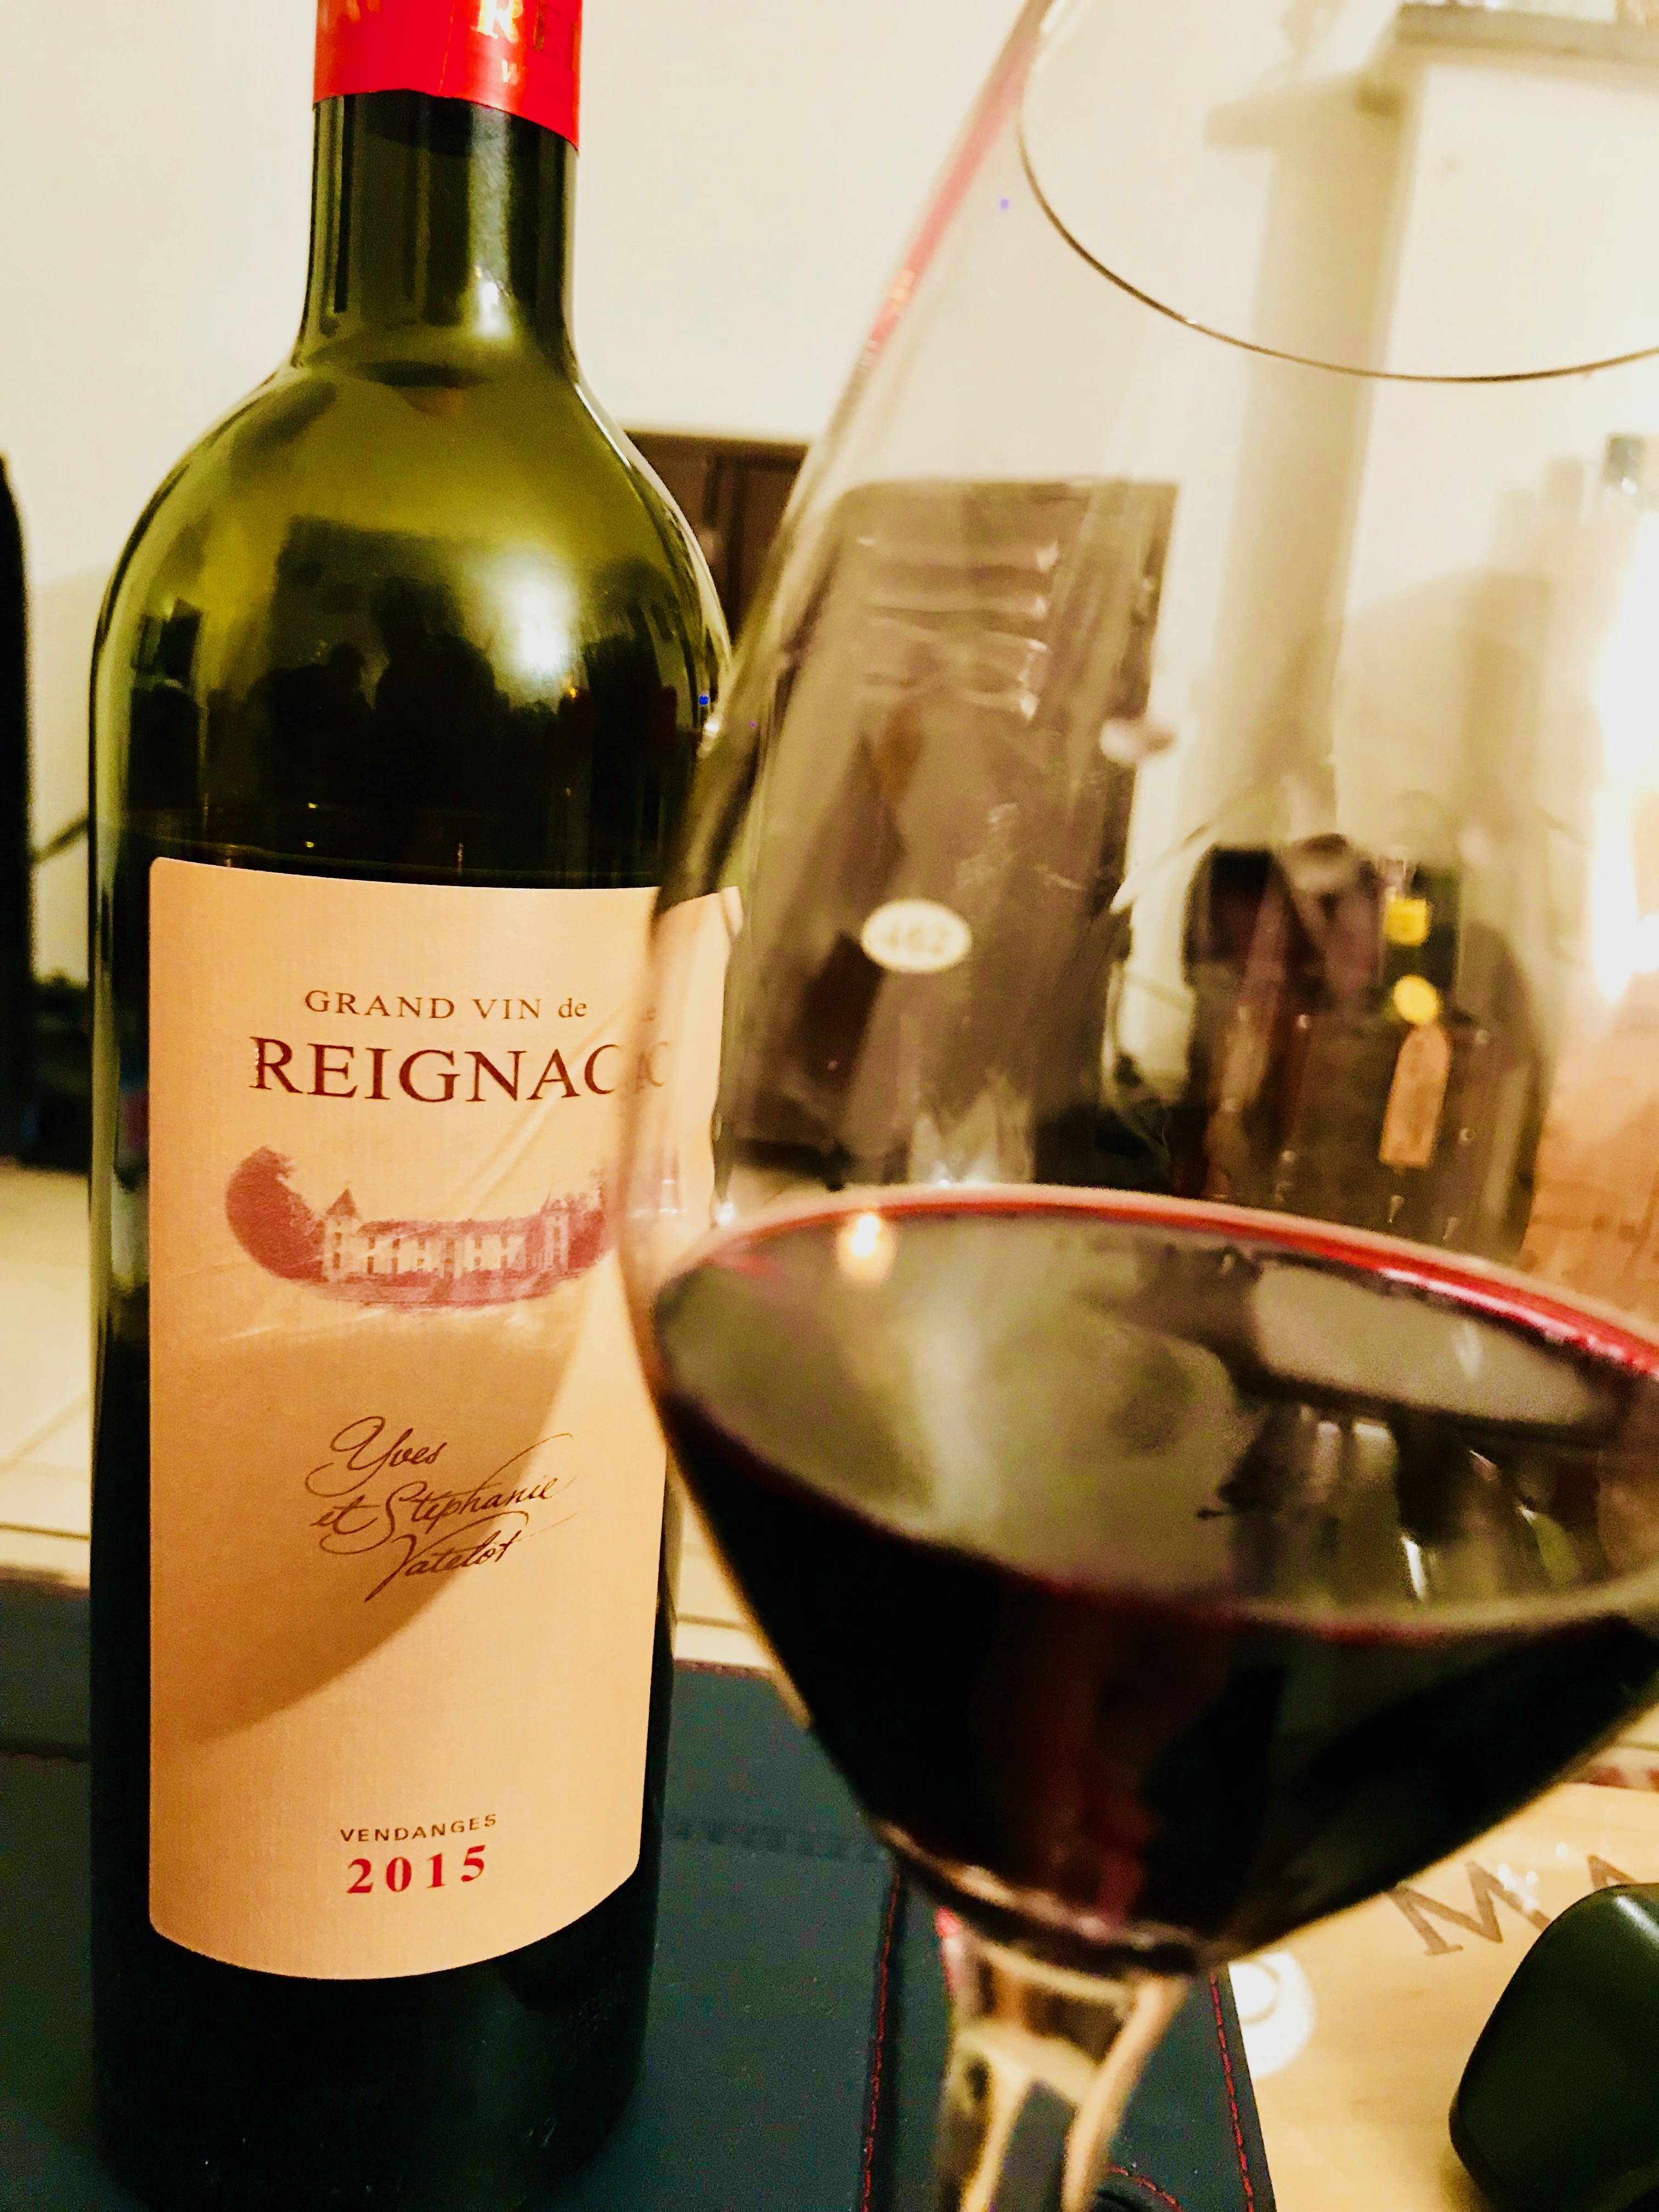 Grand vin de Reignac – 2015